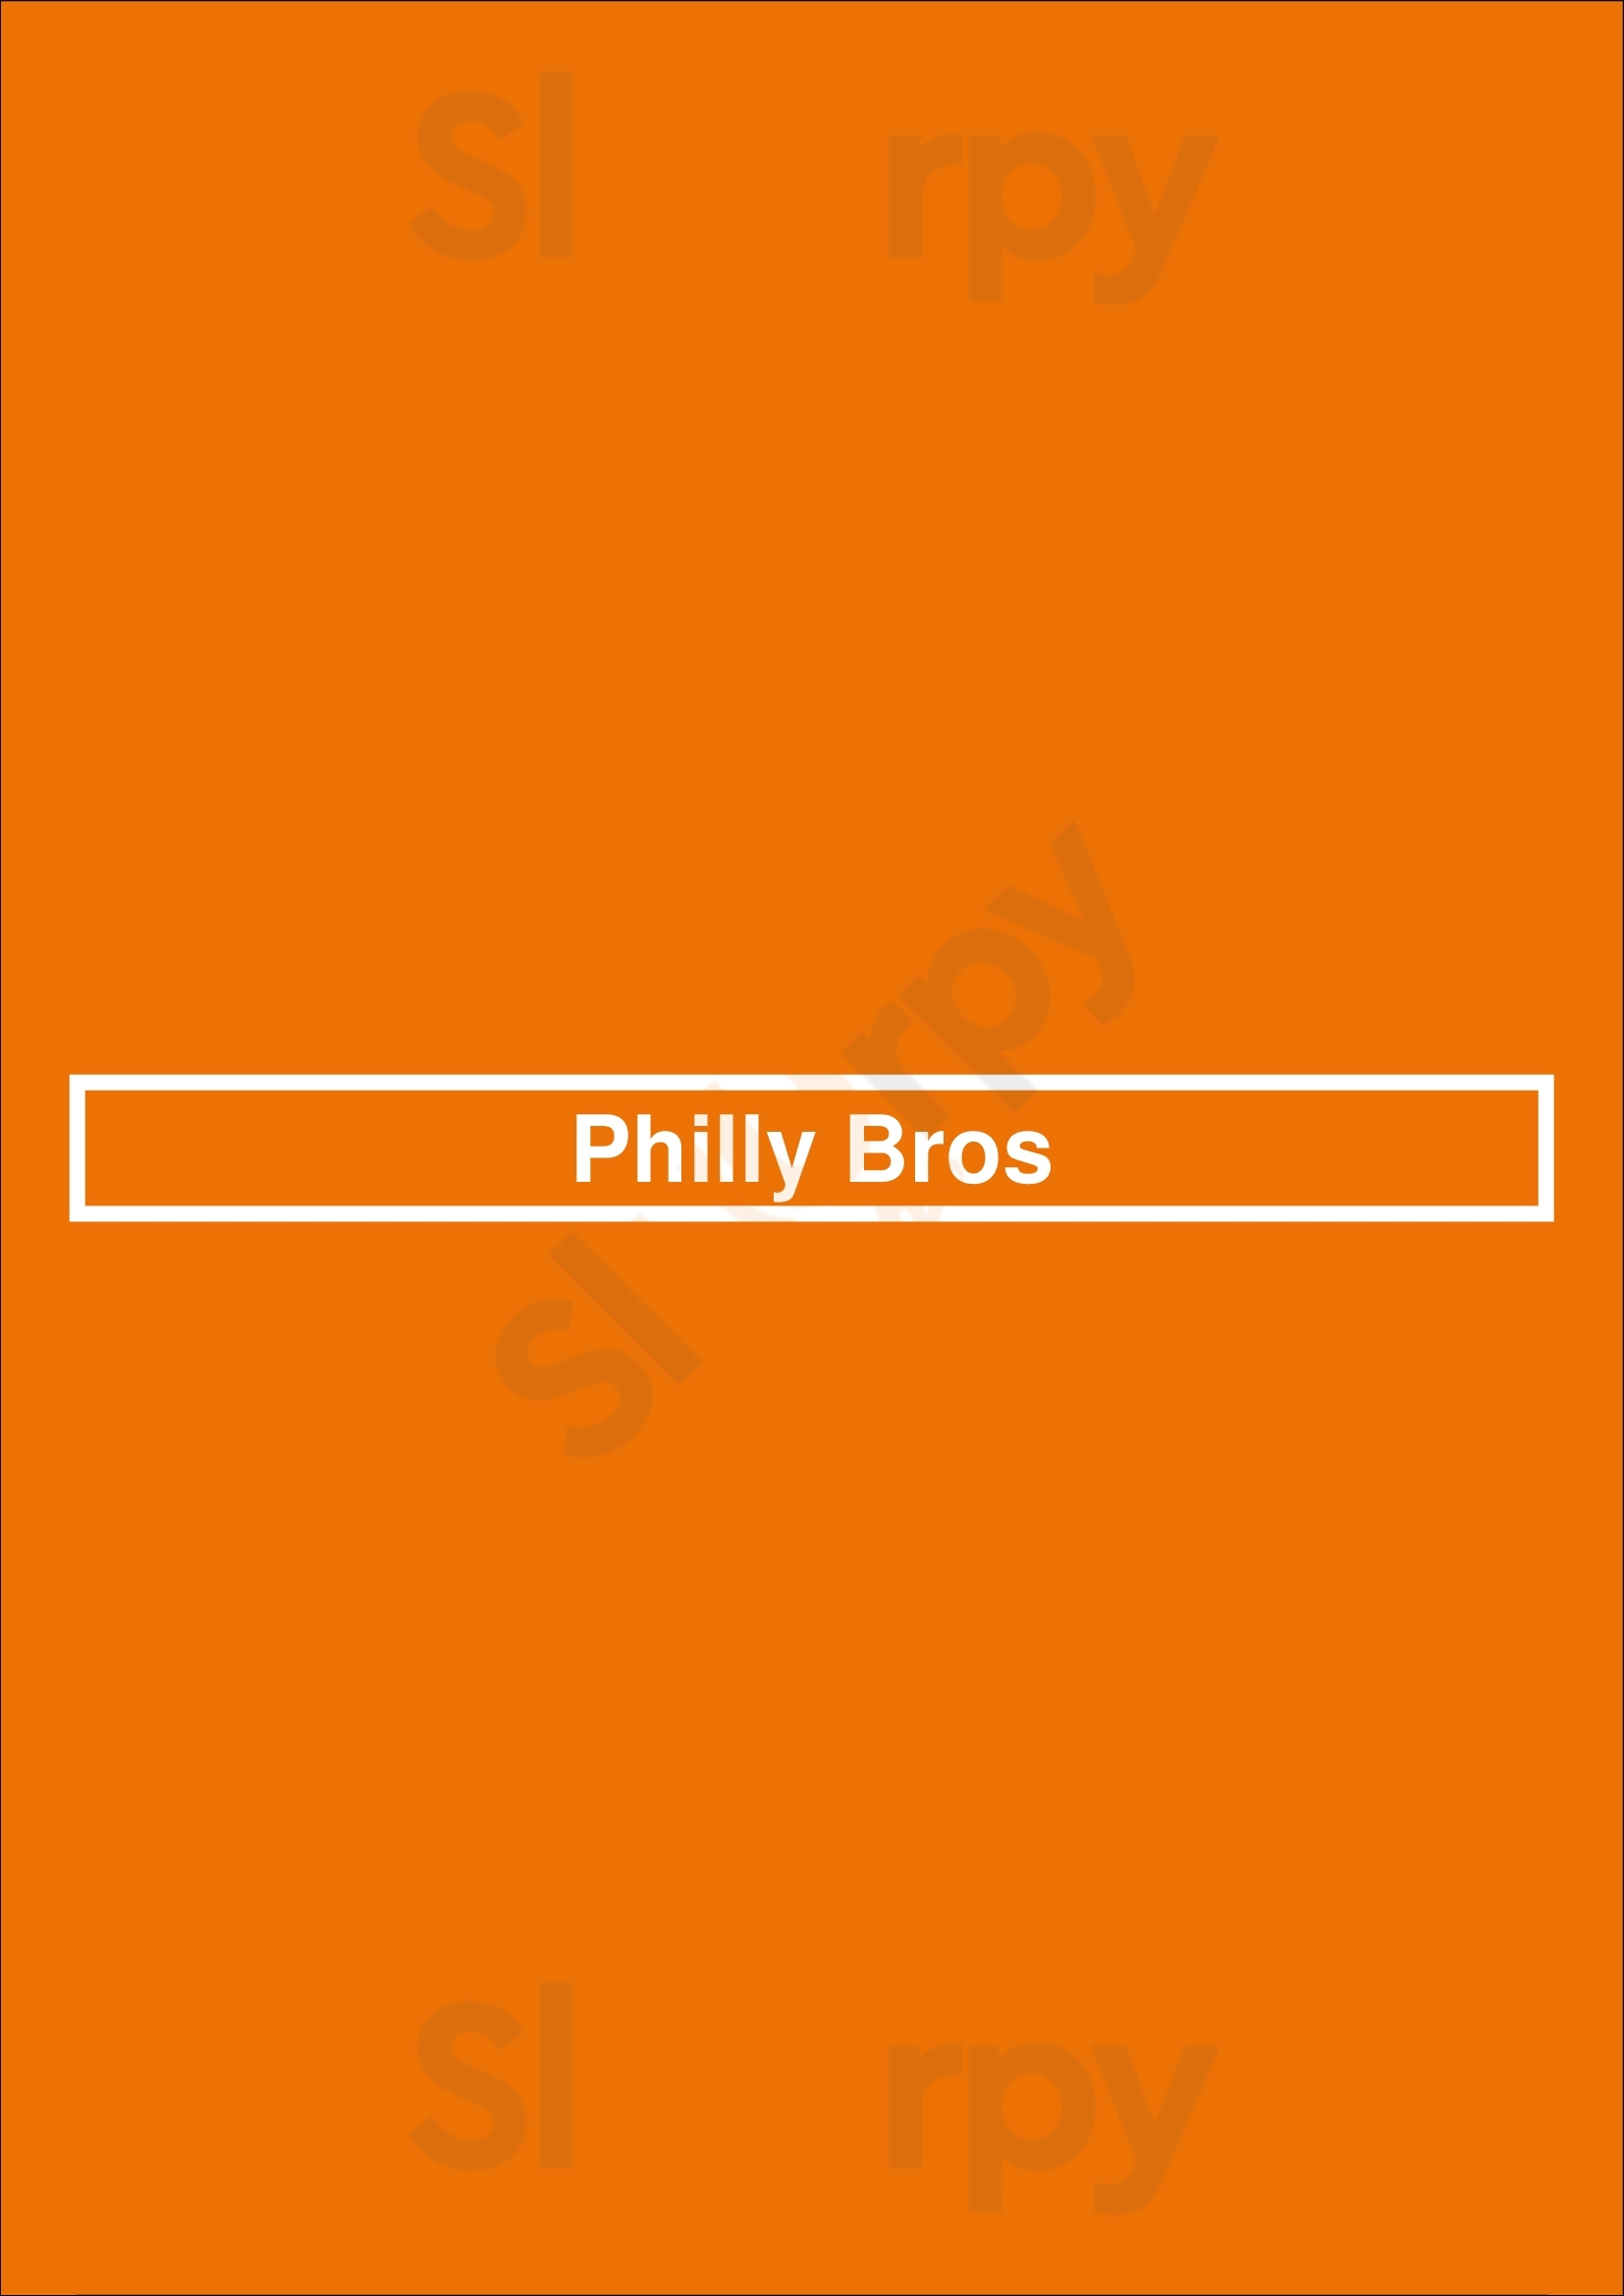 Philly Bros Chicago Menu - 1